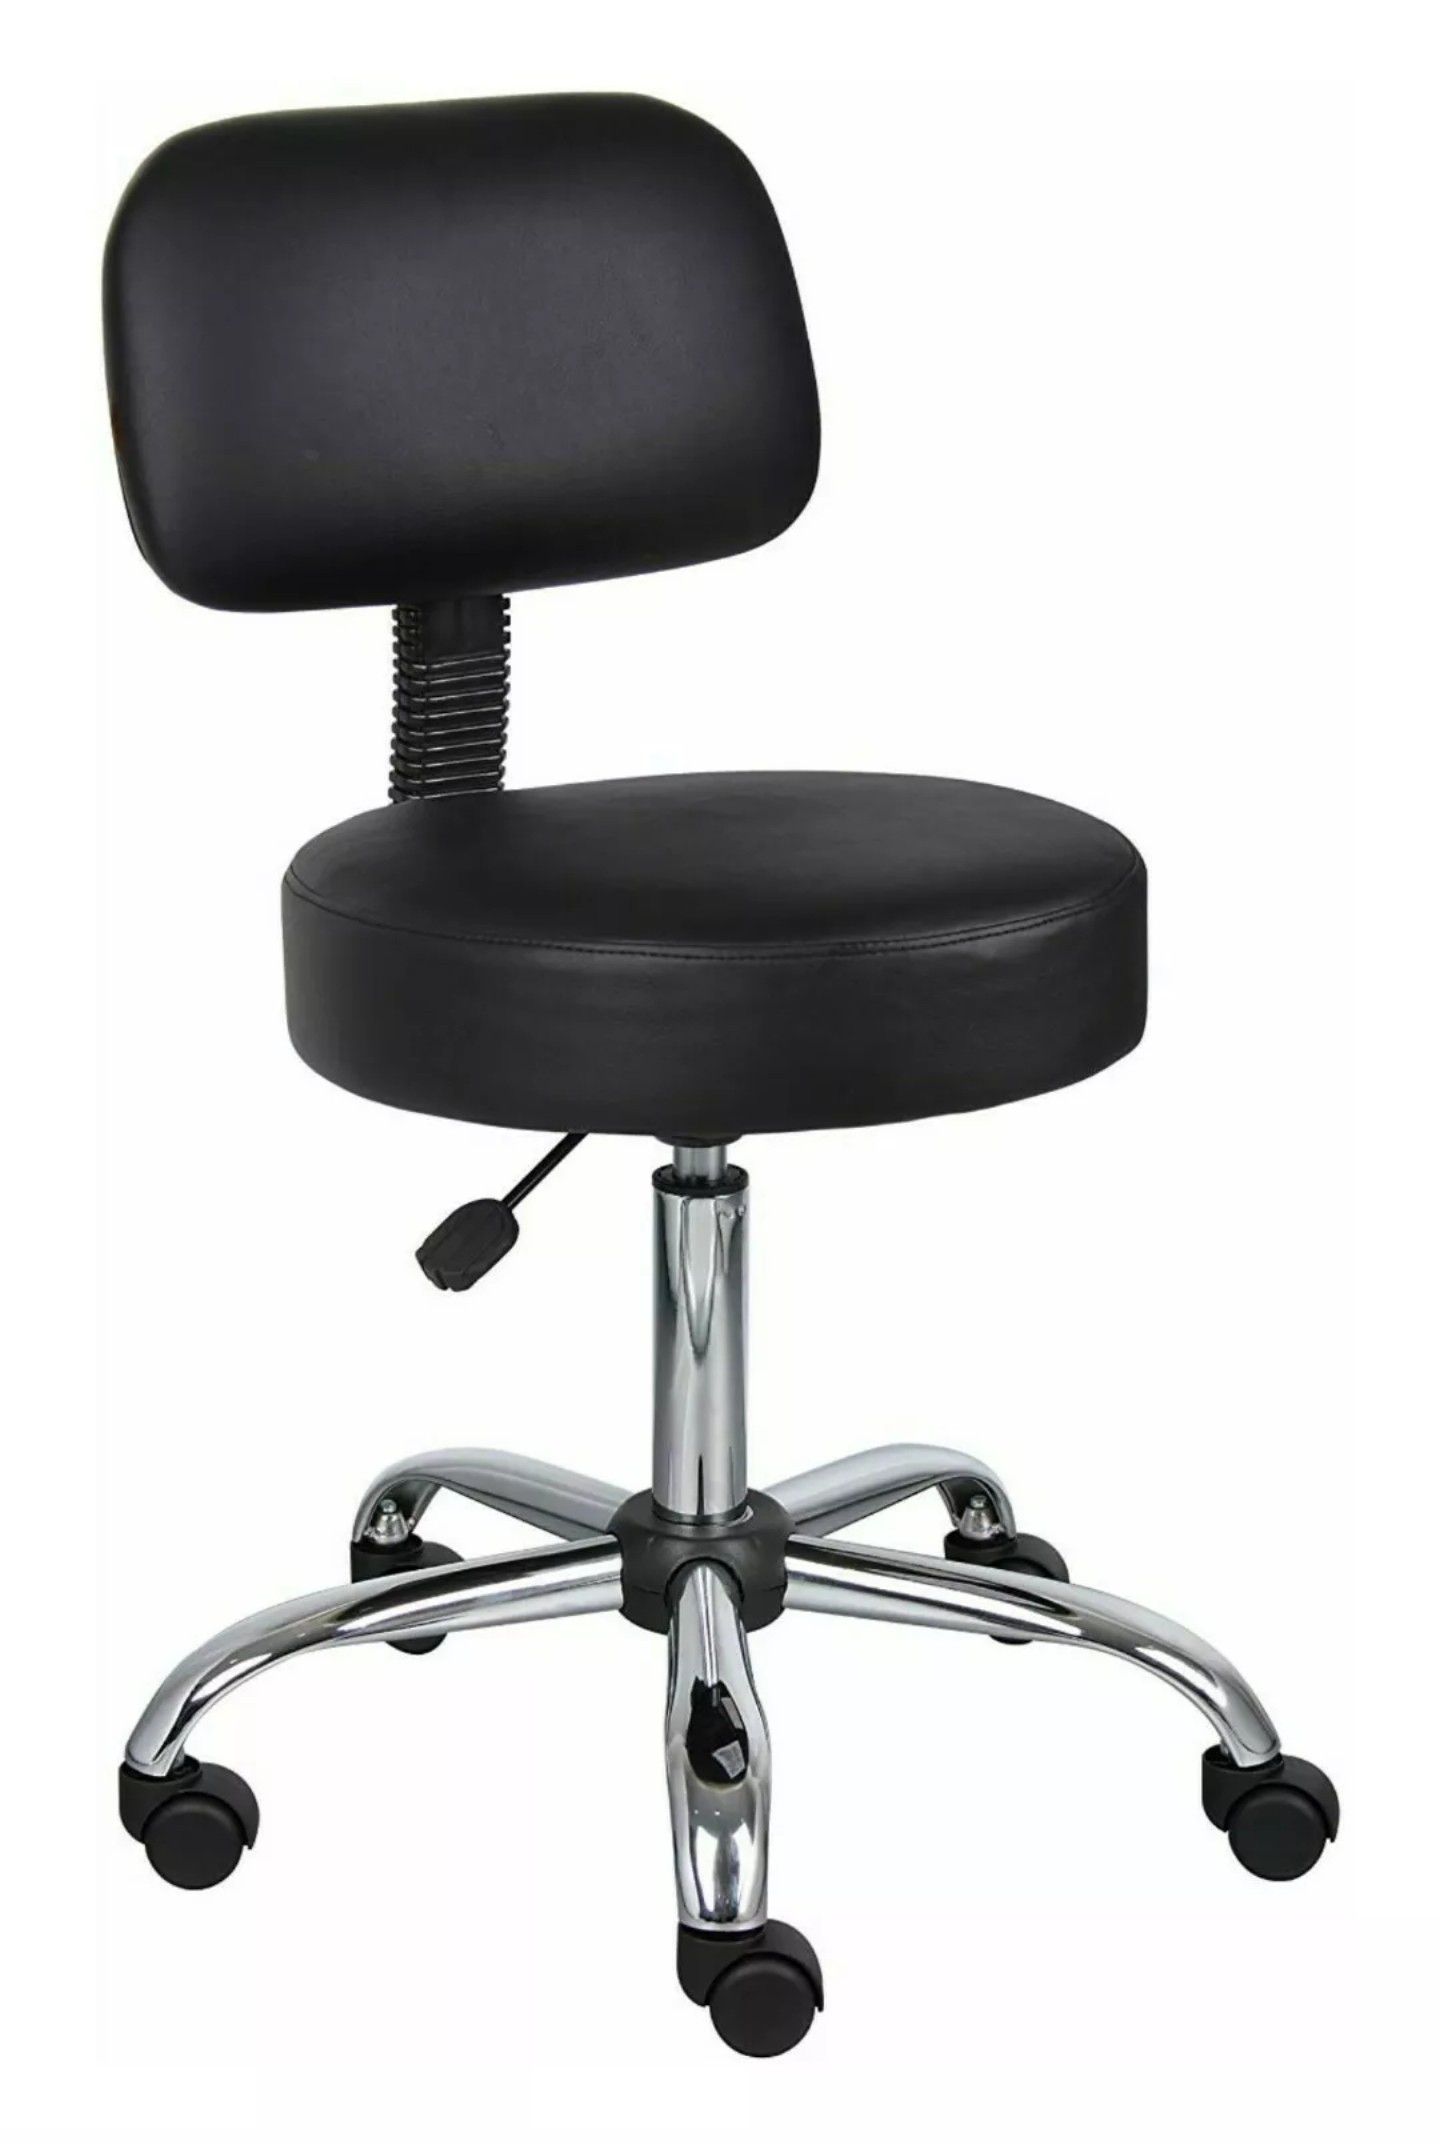 Boss Office Medical Chair Brand New